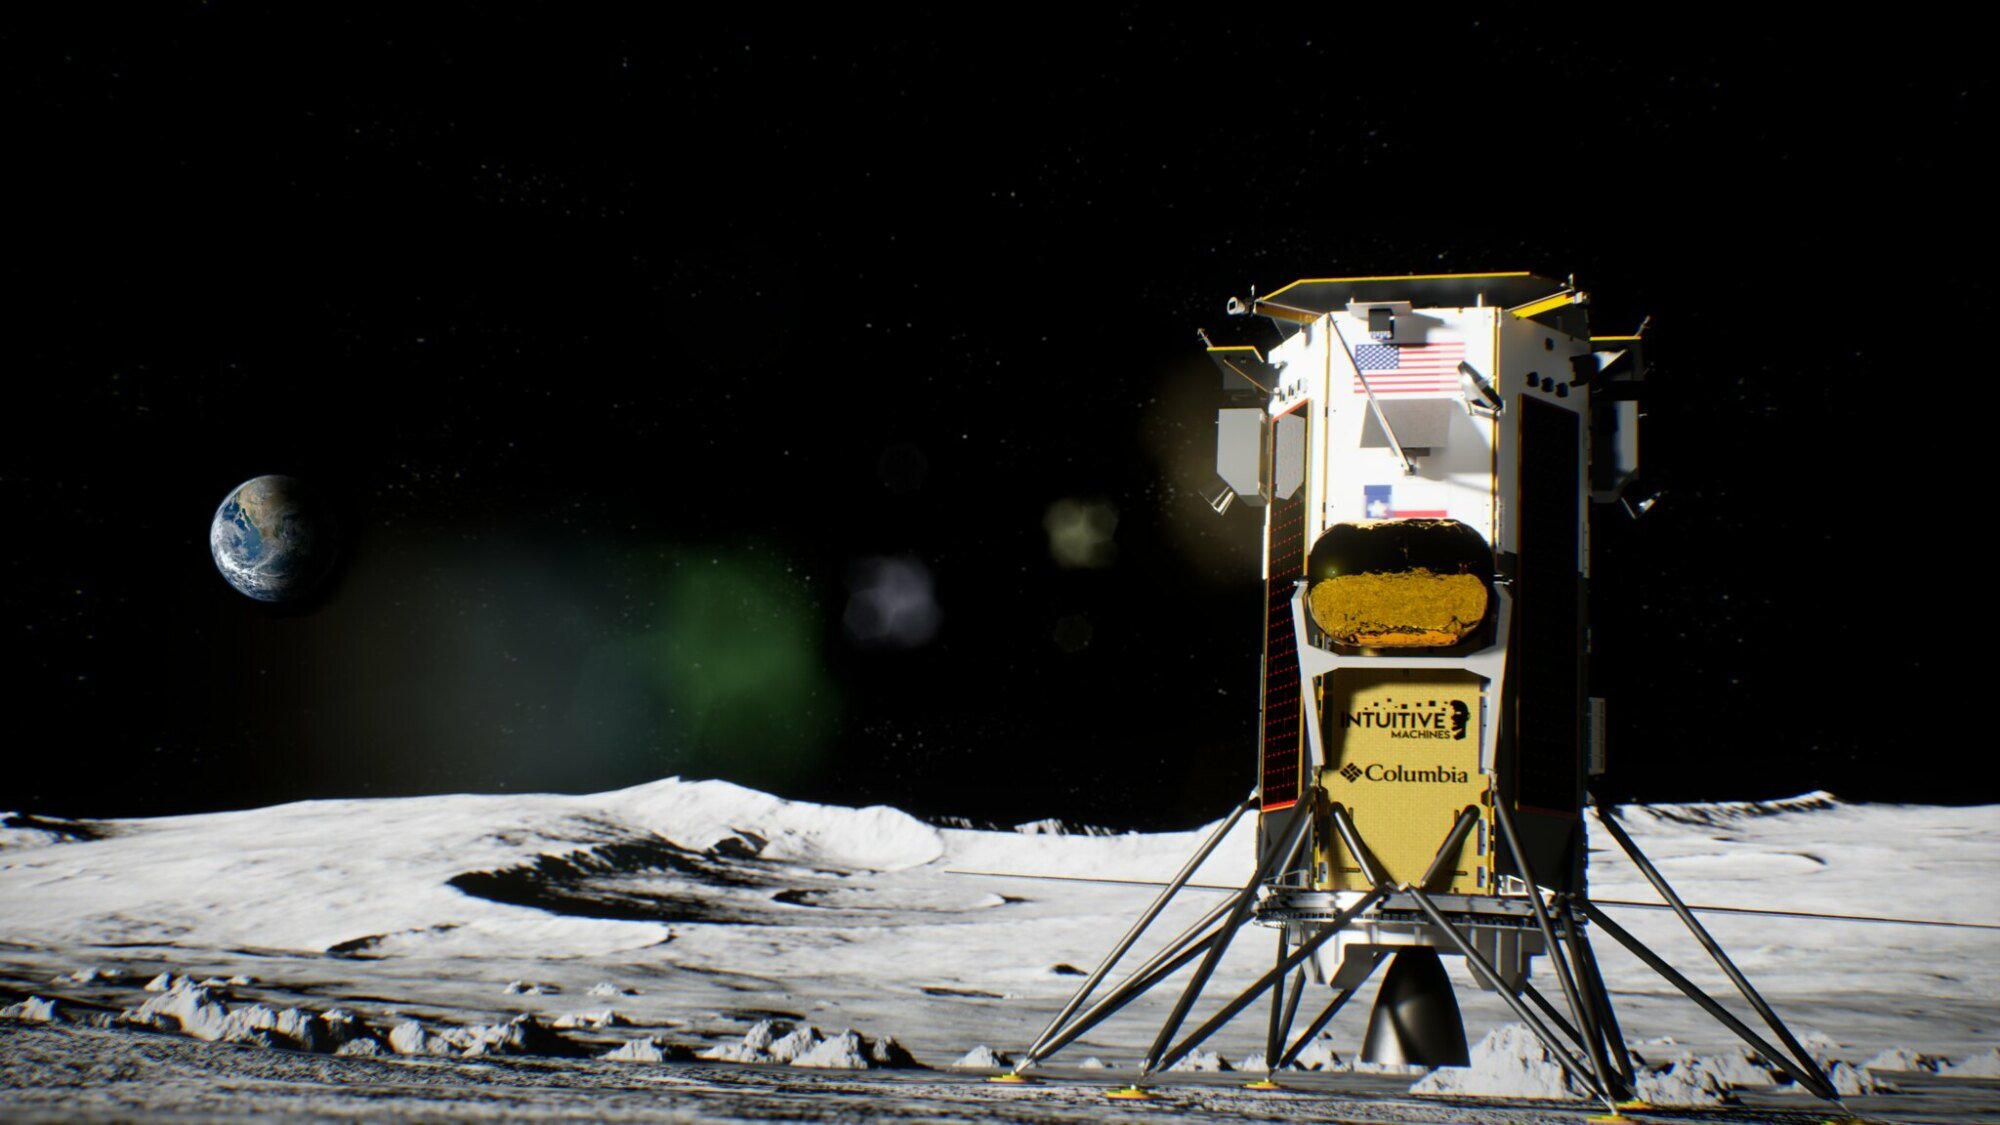 Nova-C lander landing on the moon